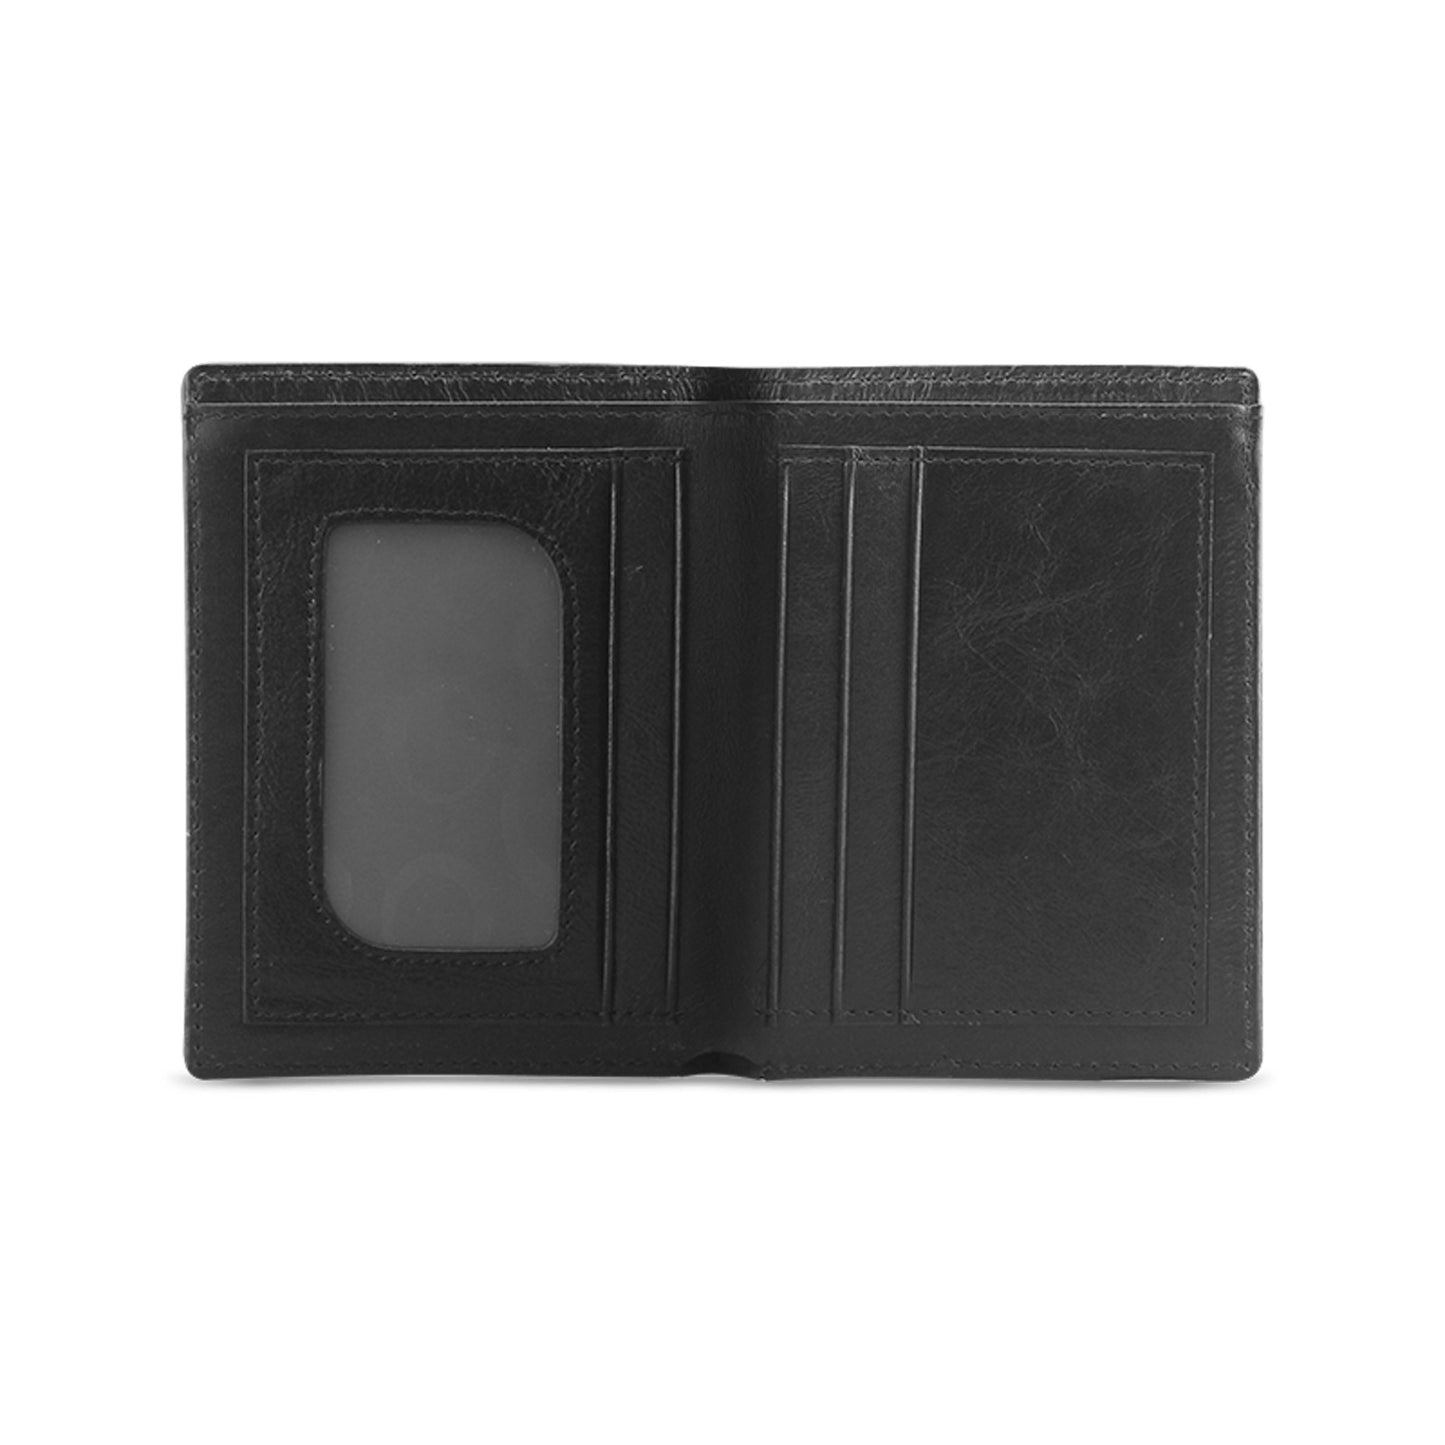 Men's Leather Wallet  ~ Kappa Lambda Chi (KLC)